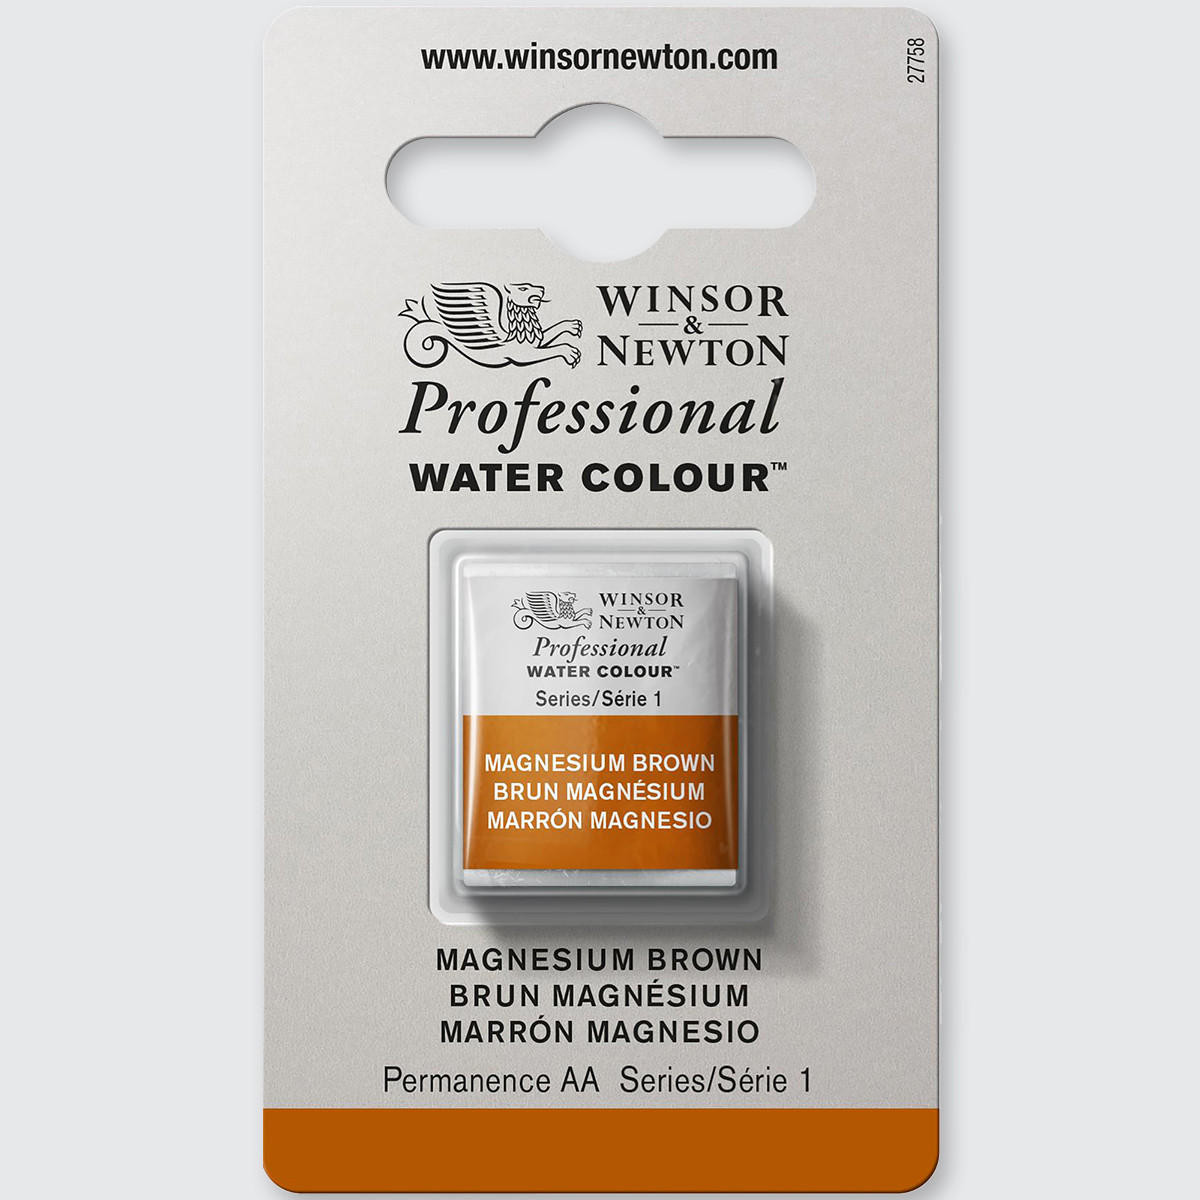 Winsor & Newton Professional Water Colour Half Pan Magnesium Brown